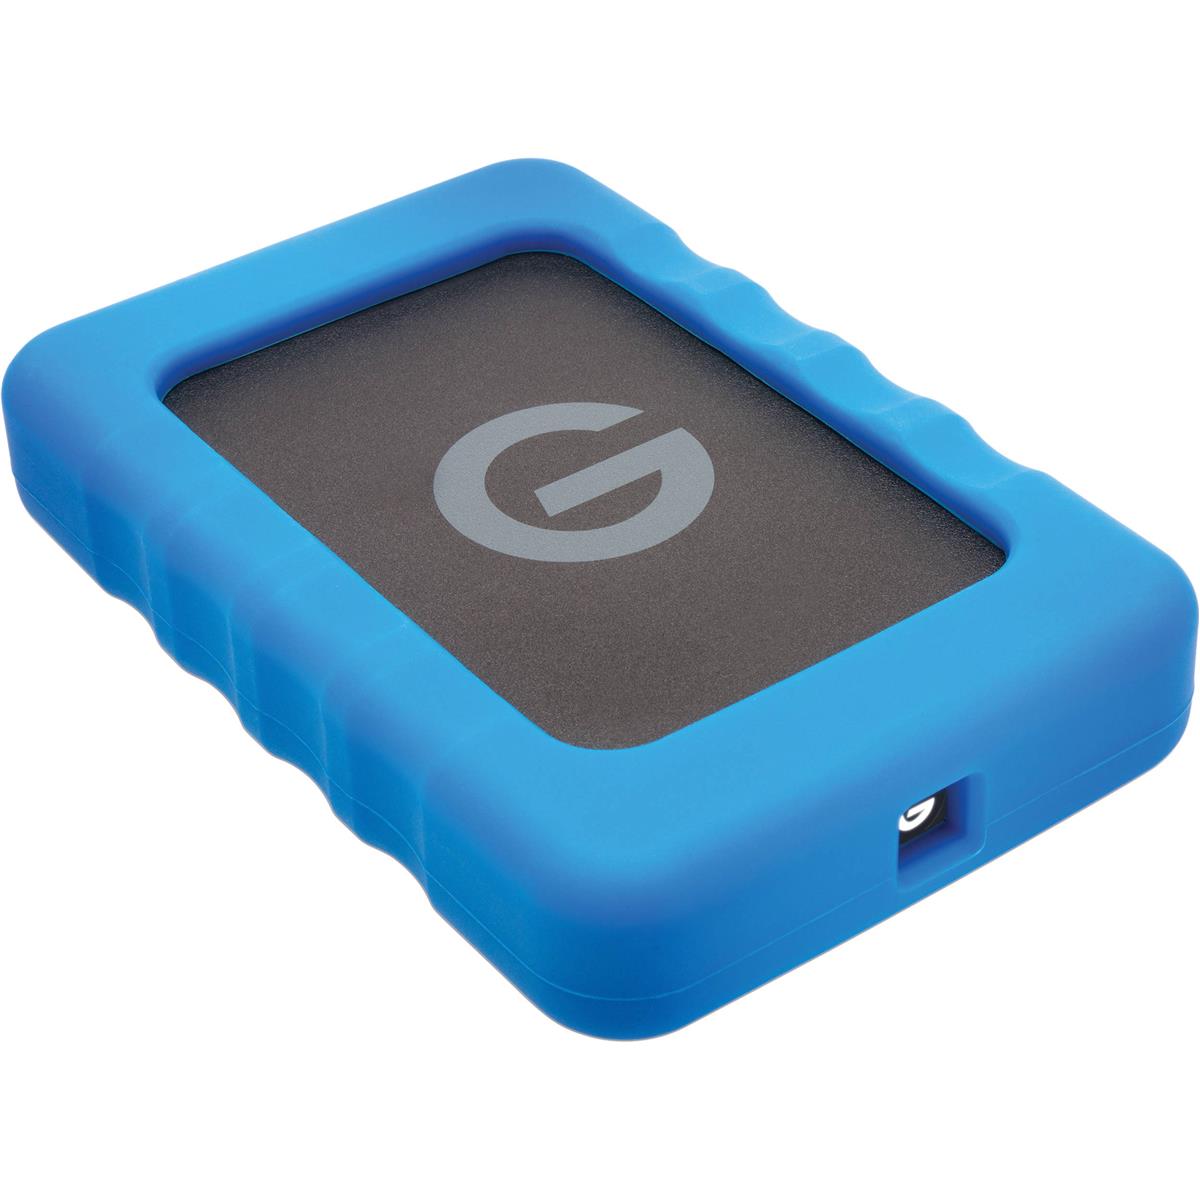 

G-Technology G-DRIVE ev RaW 500GB USB 3.0 External SSD with Rugged Bumper